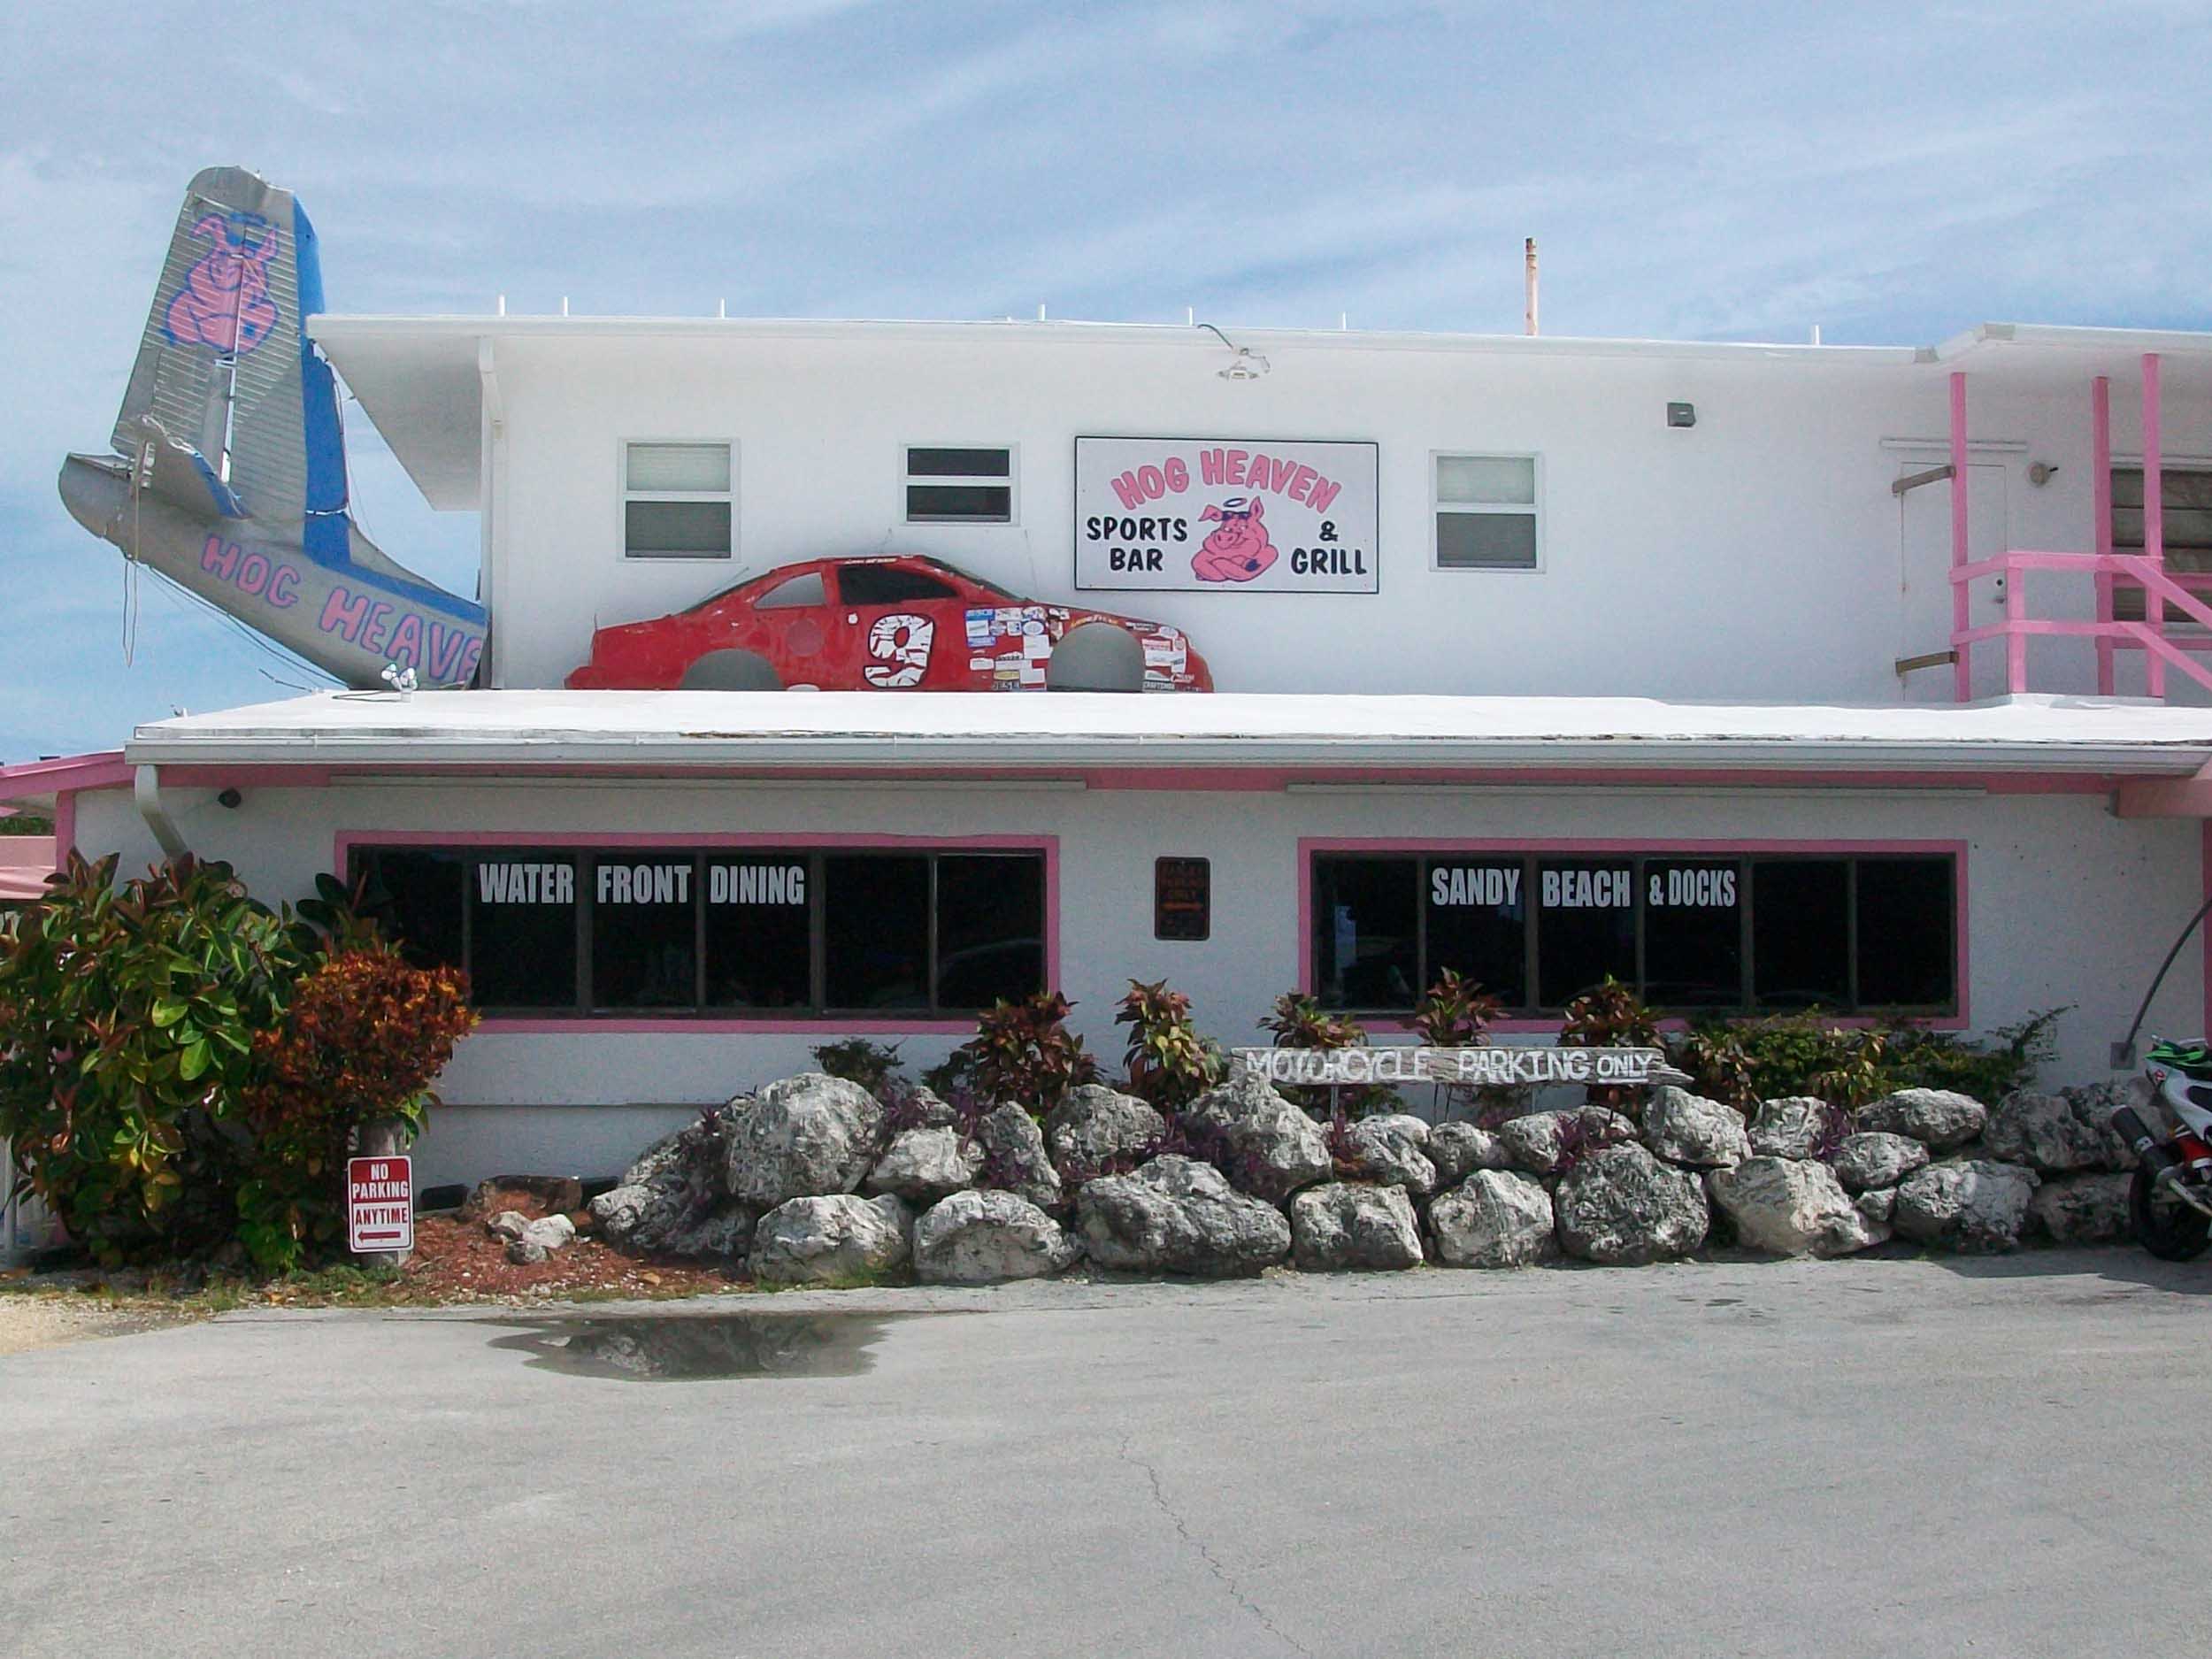 Hog Heaven Sports Bar and Grill Entrance